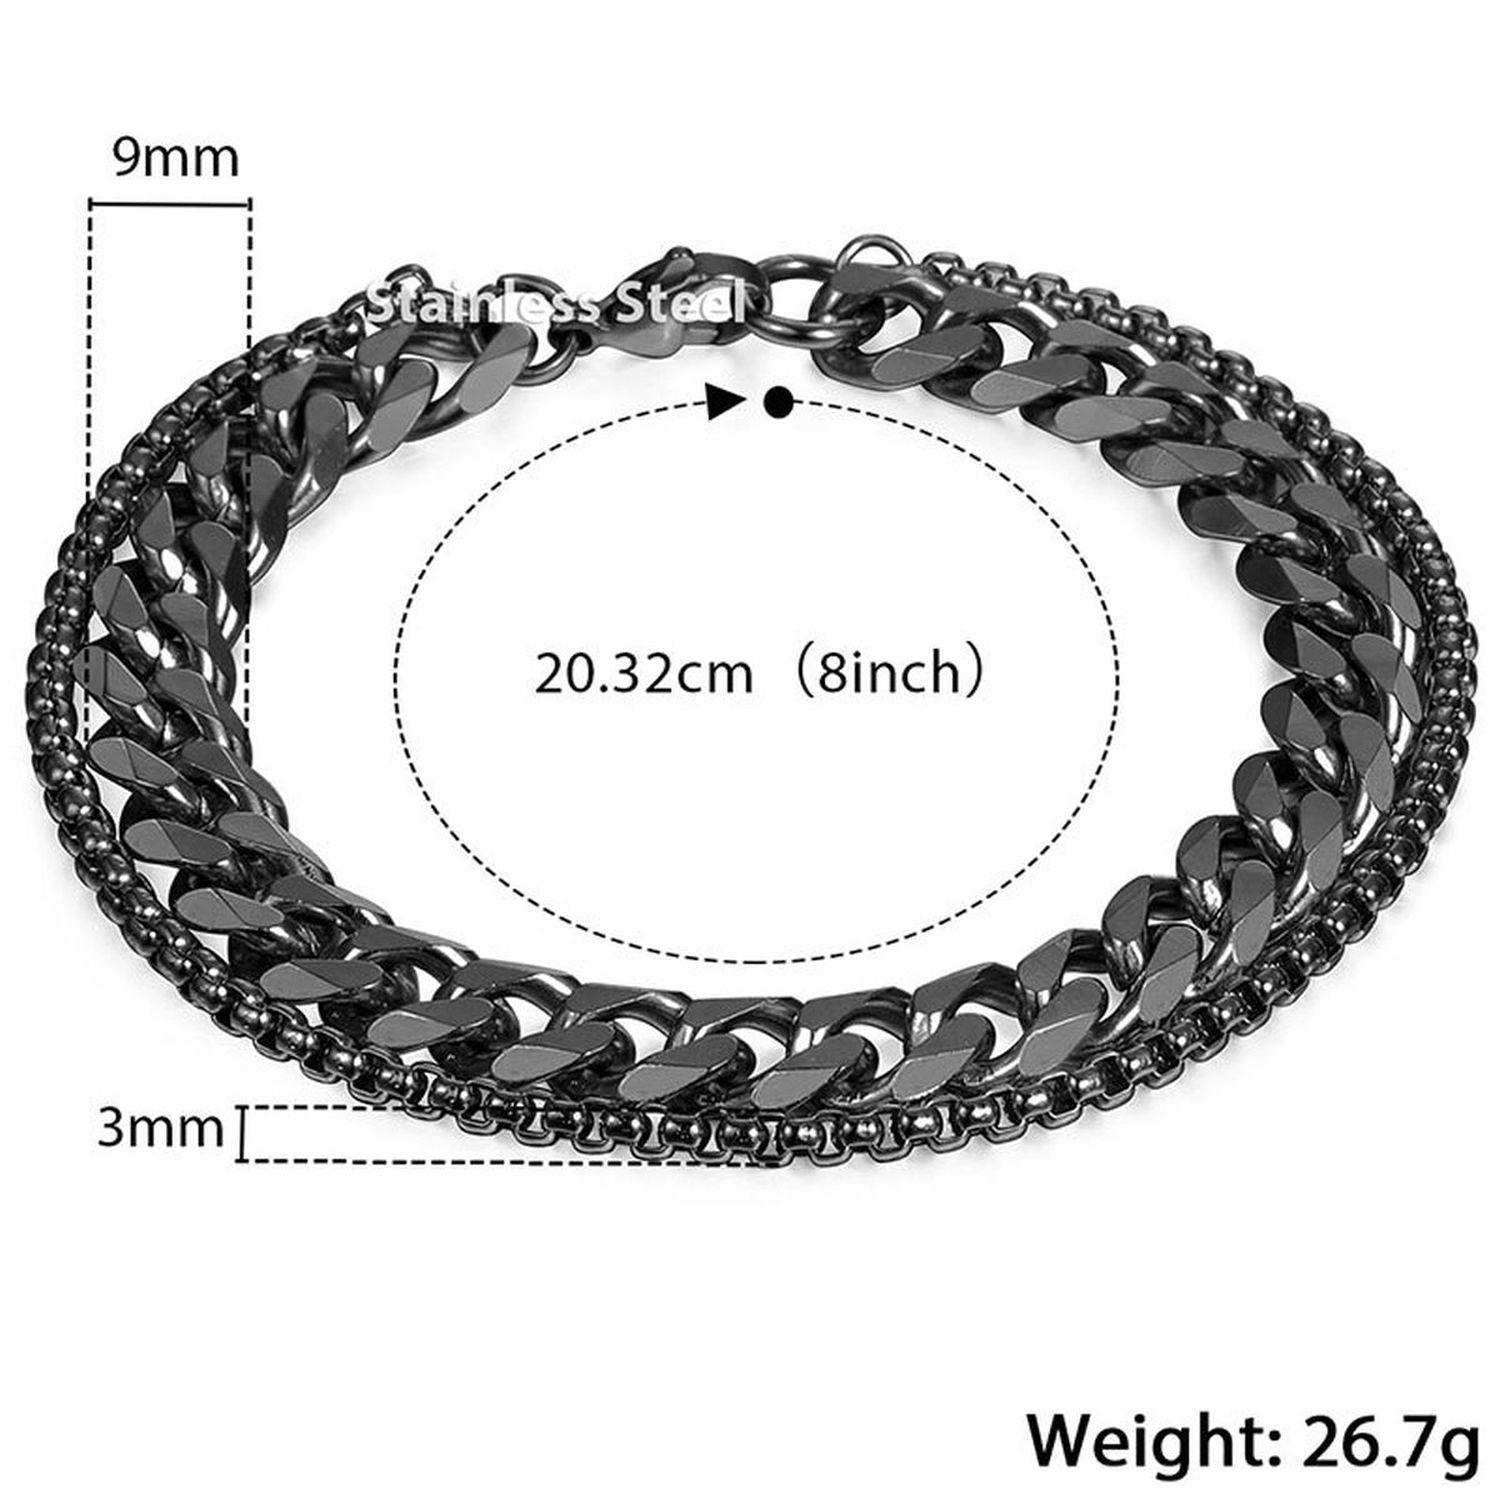 Layered Wrist Wrap Black Stainless Steel Curb Popcorn Chain Bracelet